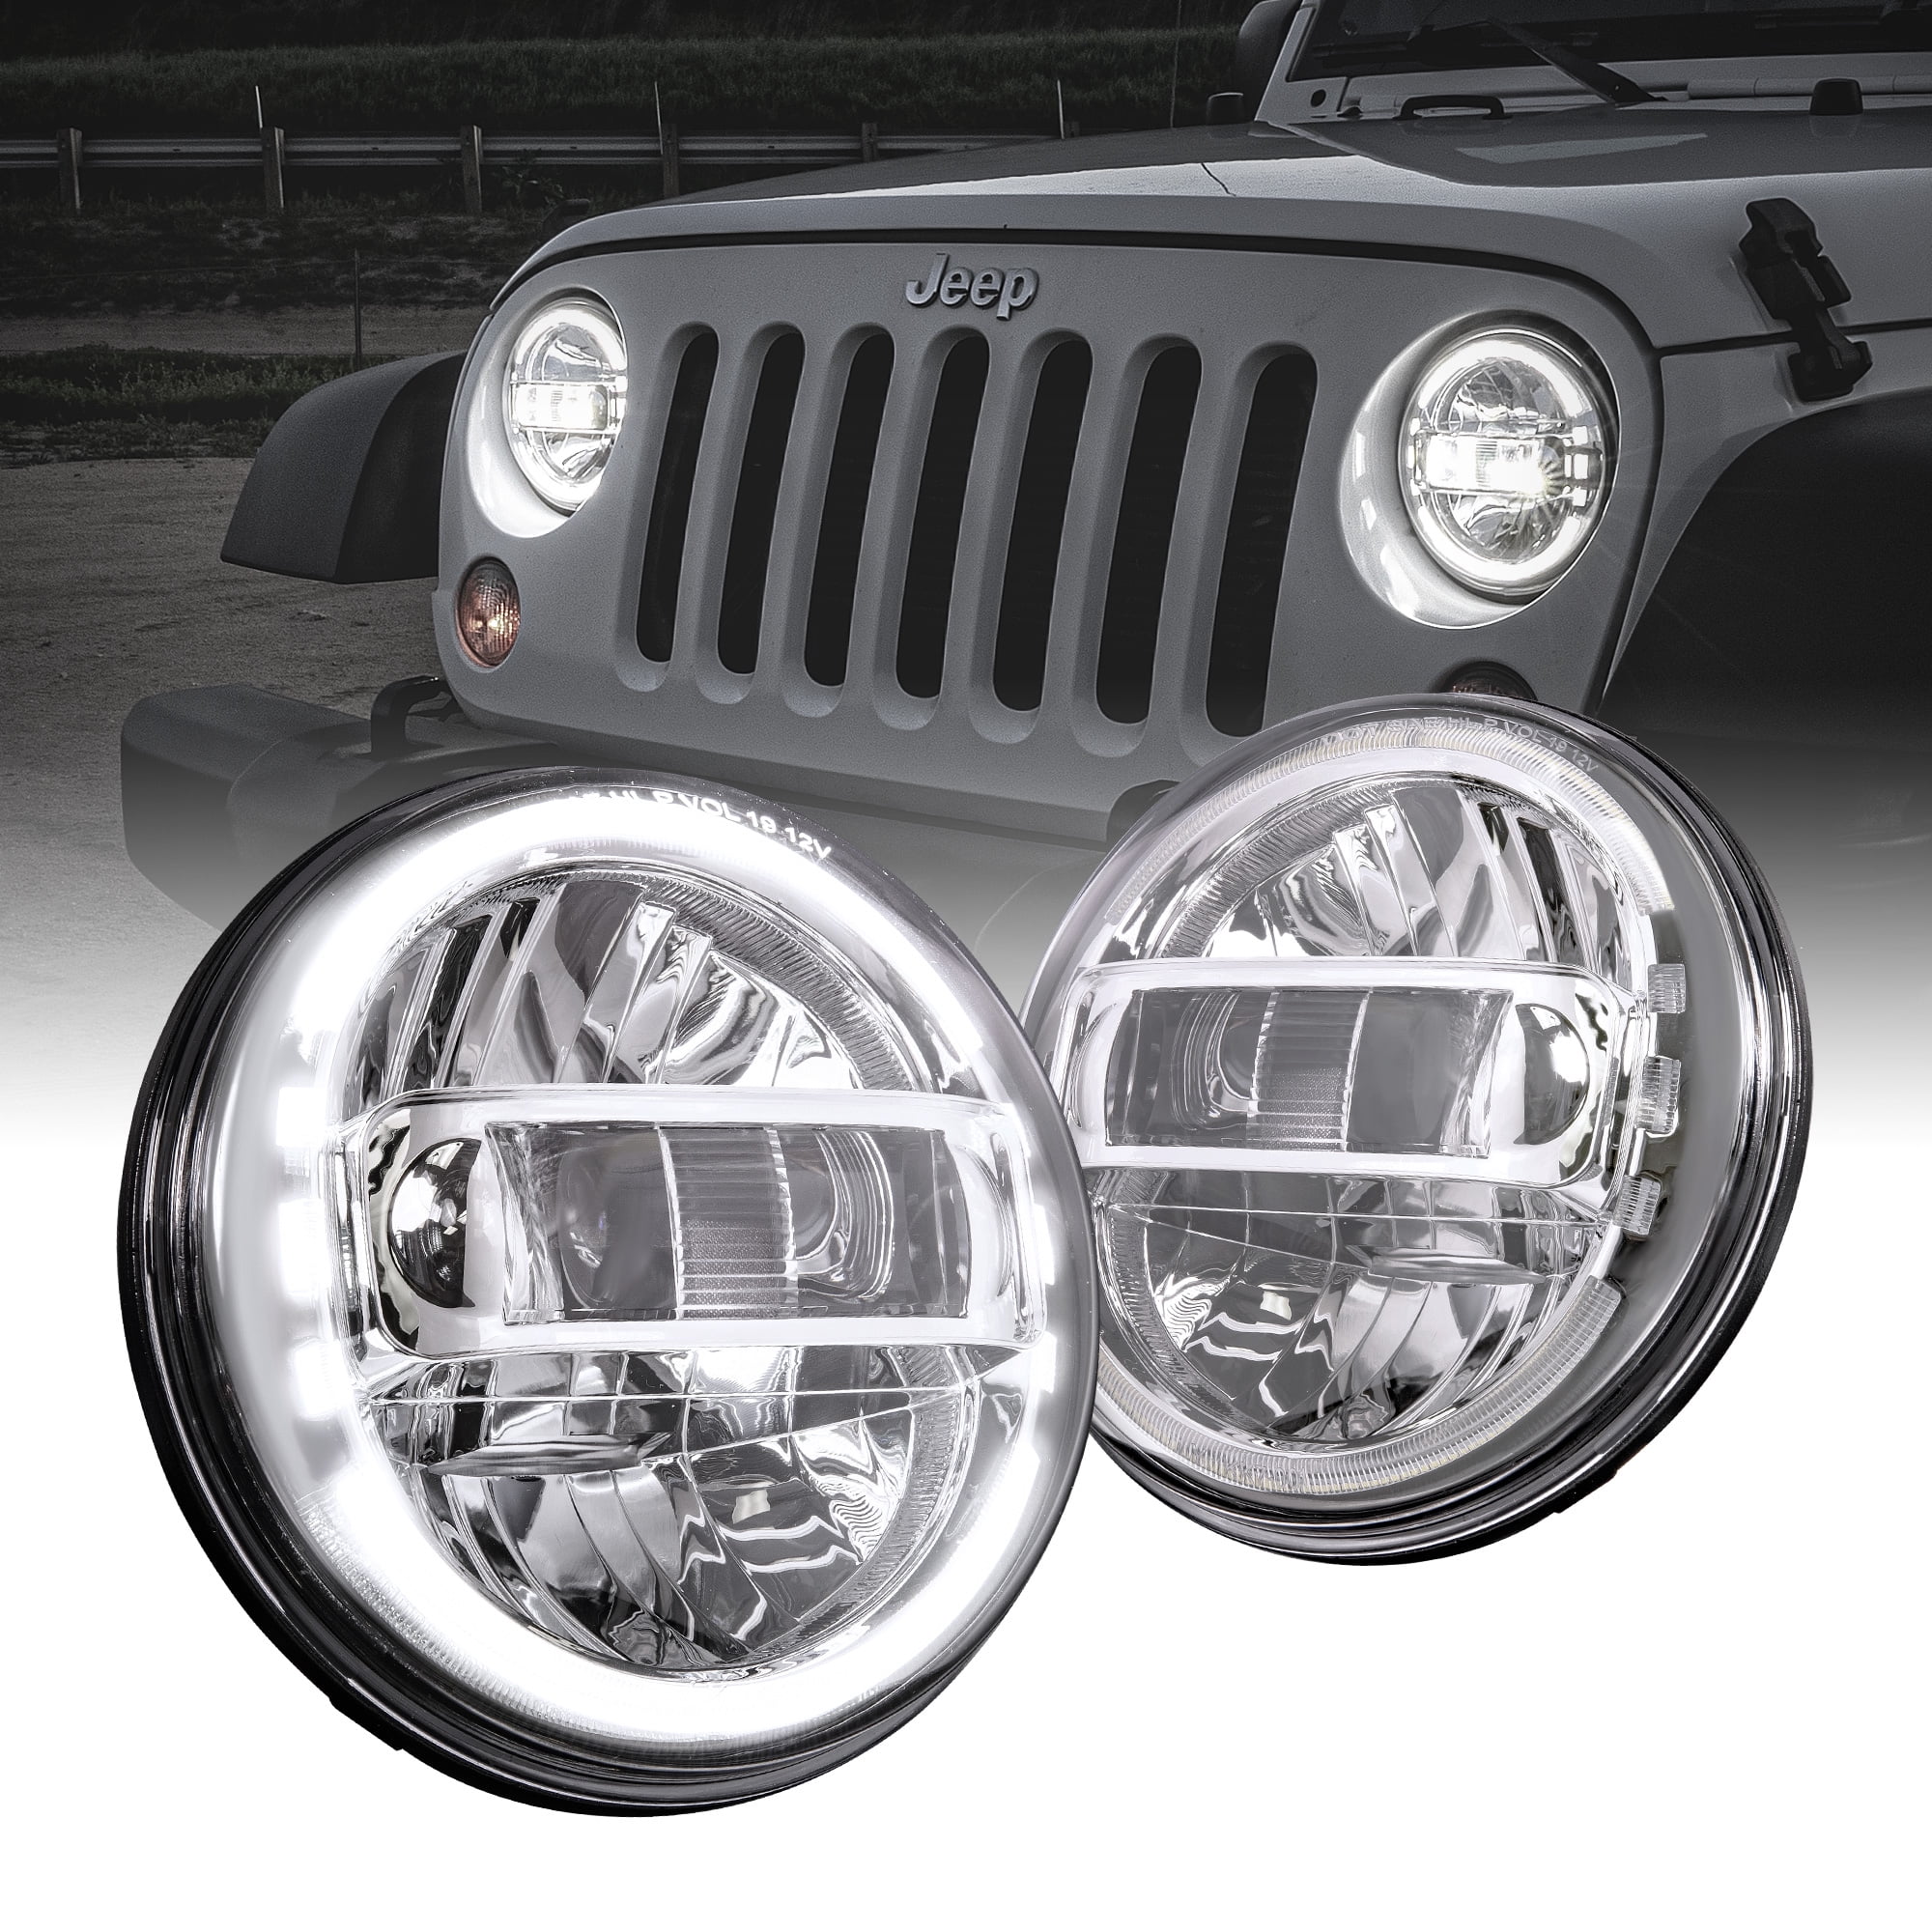 2PC 7inch Round Led Headlight DOT DRL For Jeep Wrangler Jk Tj Cj Lj Hummer H1 